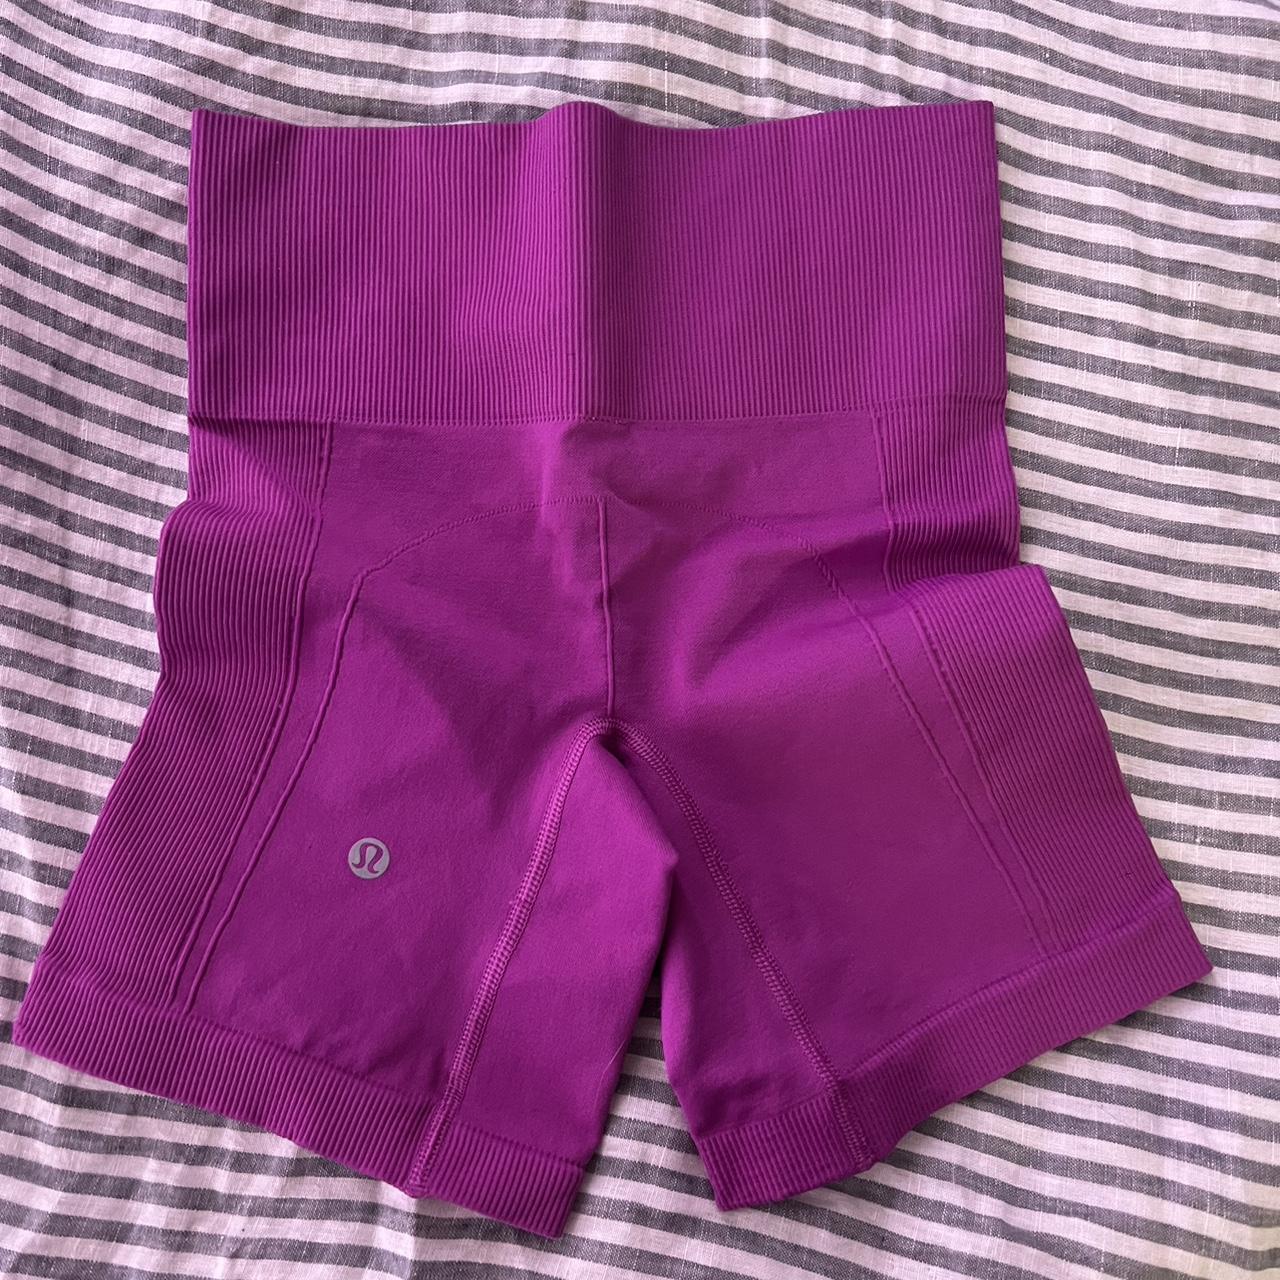 Lululemon Pink shorts Never worn Size 2 #lululemon... - Depop